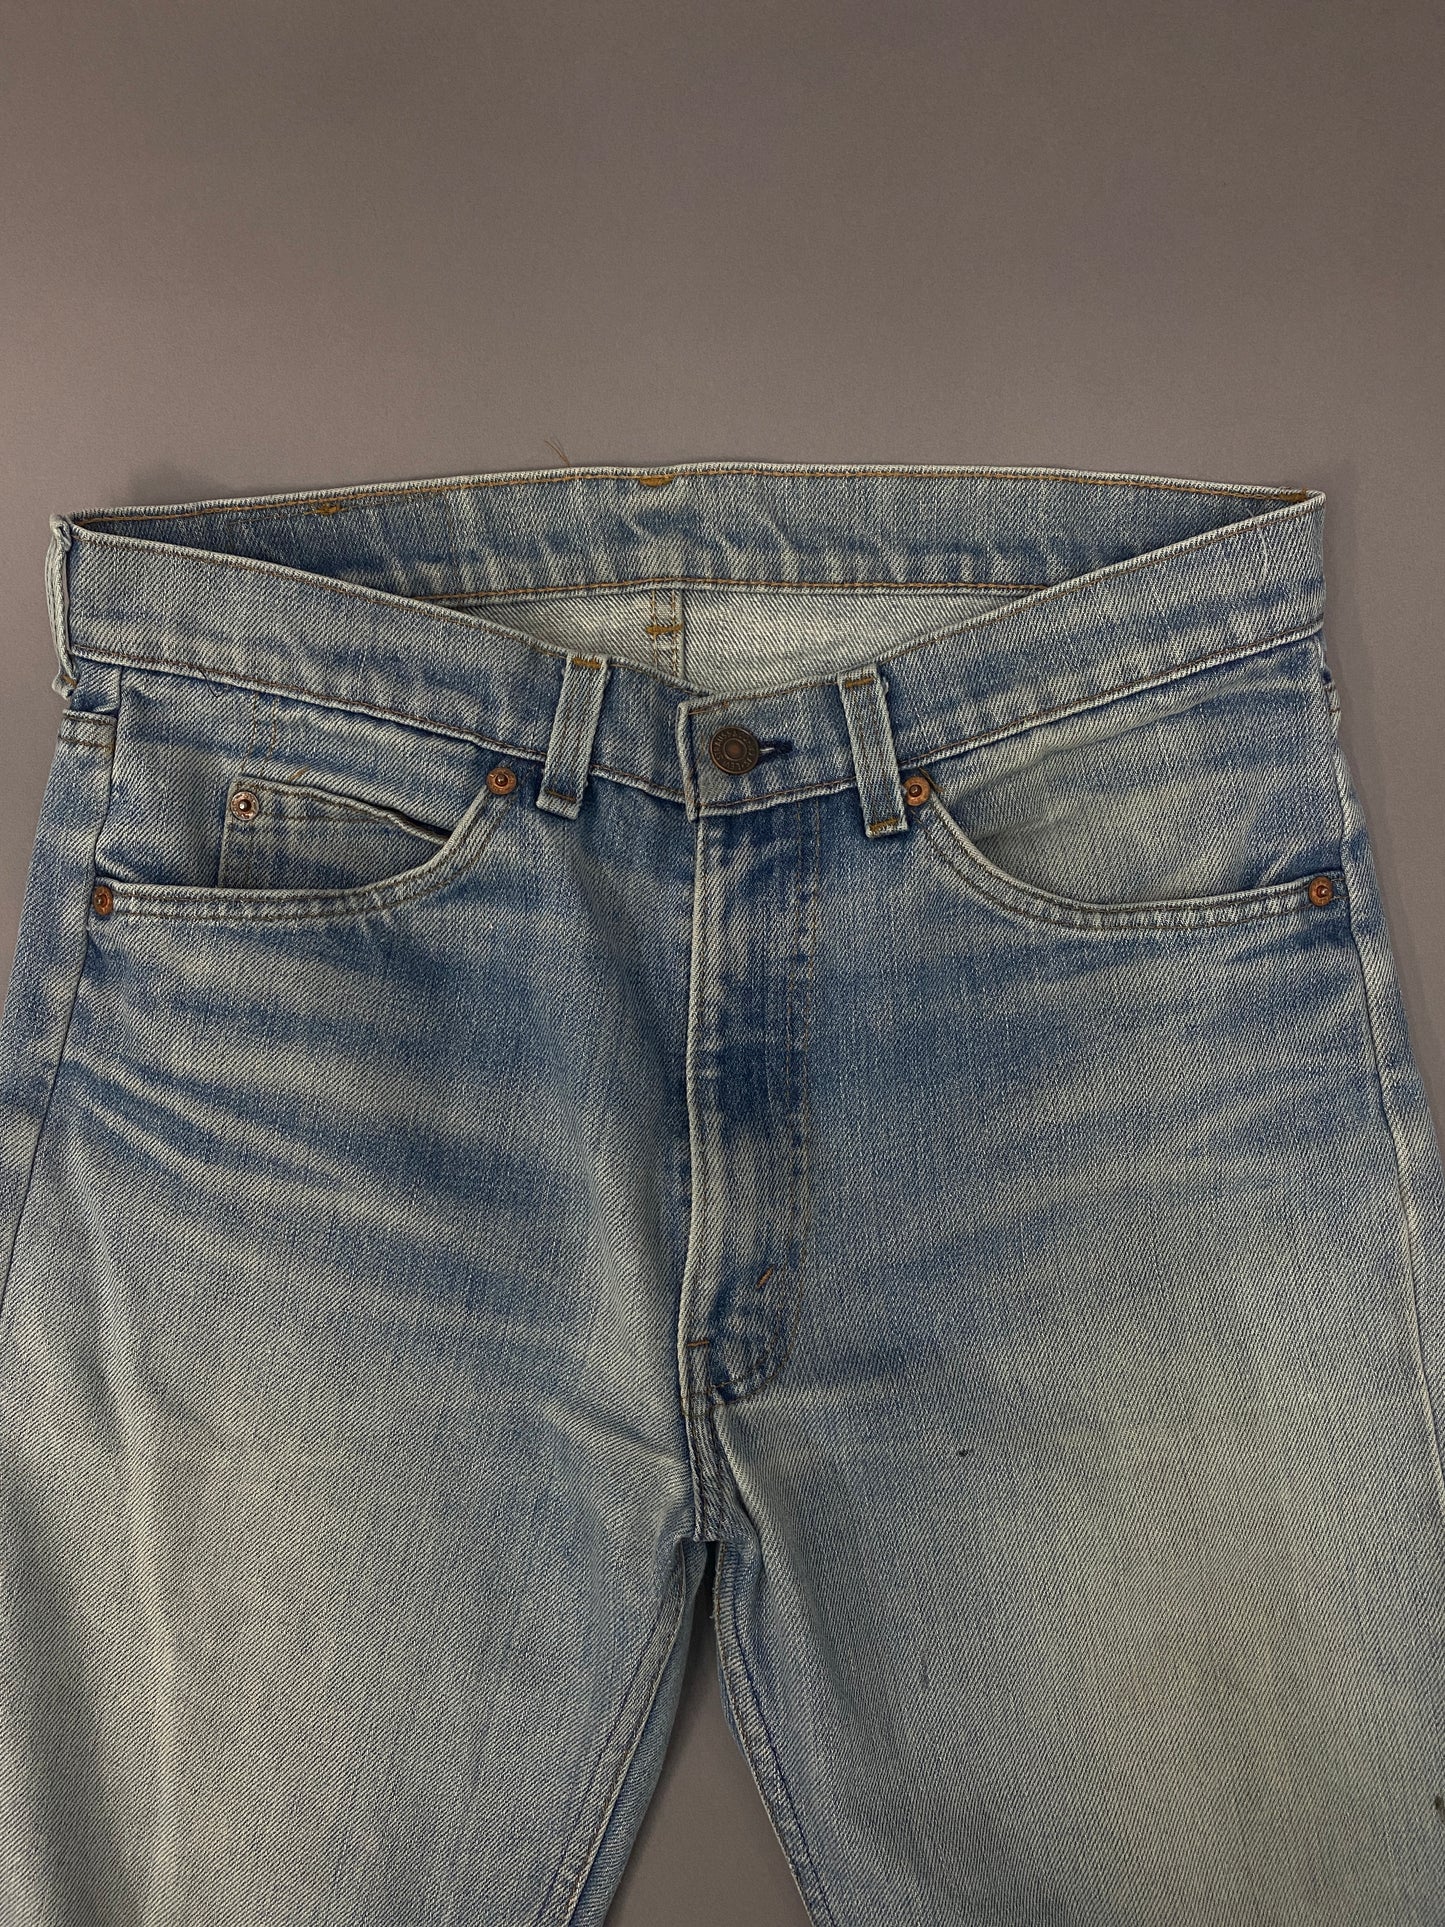 Jeans Levi's 505 Orange Tab - 32 x 36